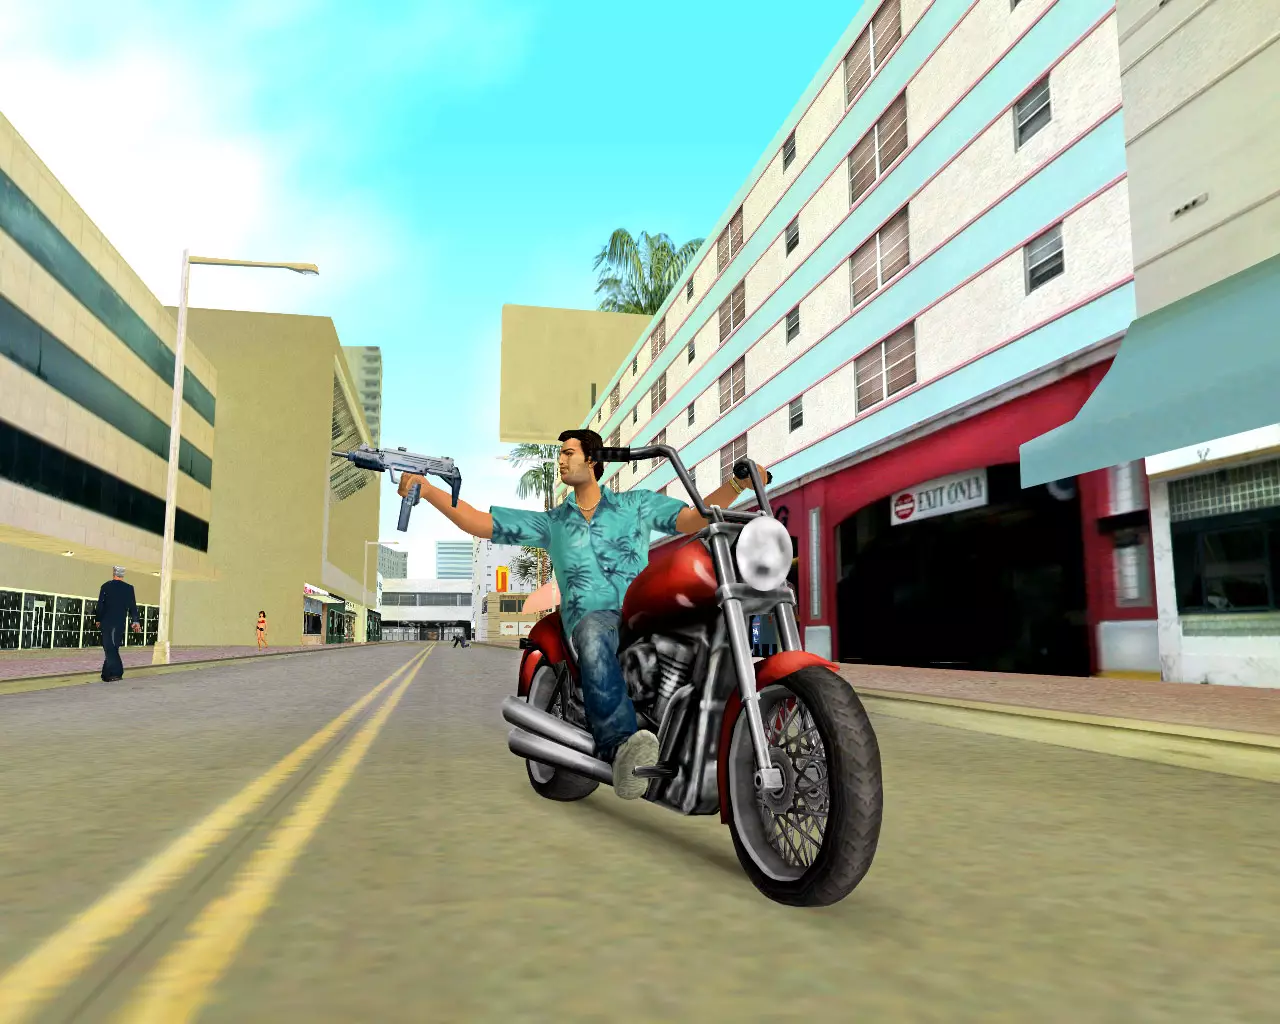 Grand Theft Auto: Vice City (Steam version) /